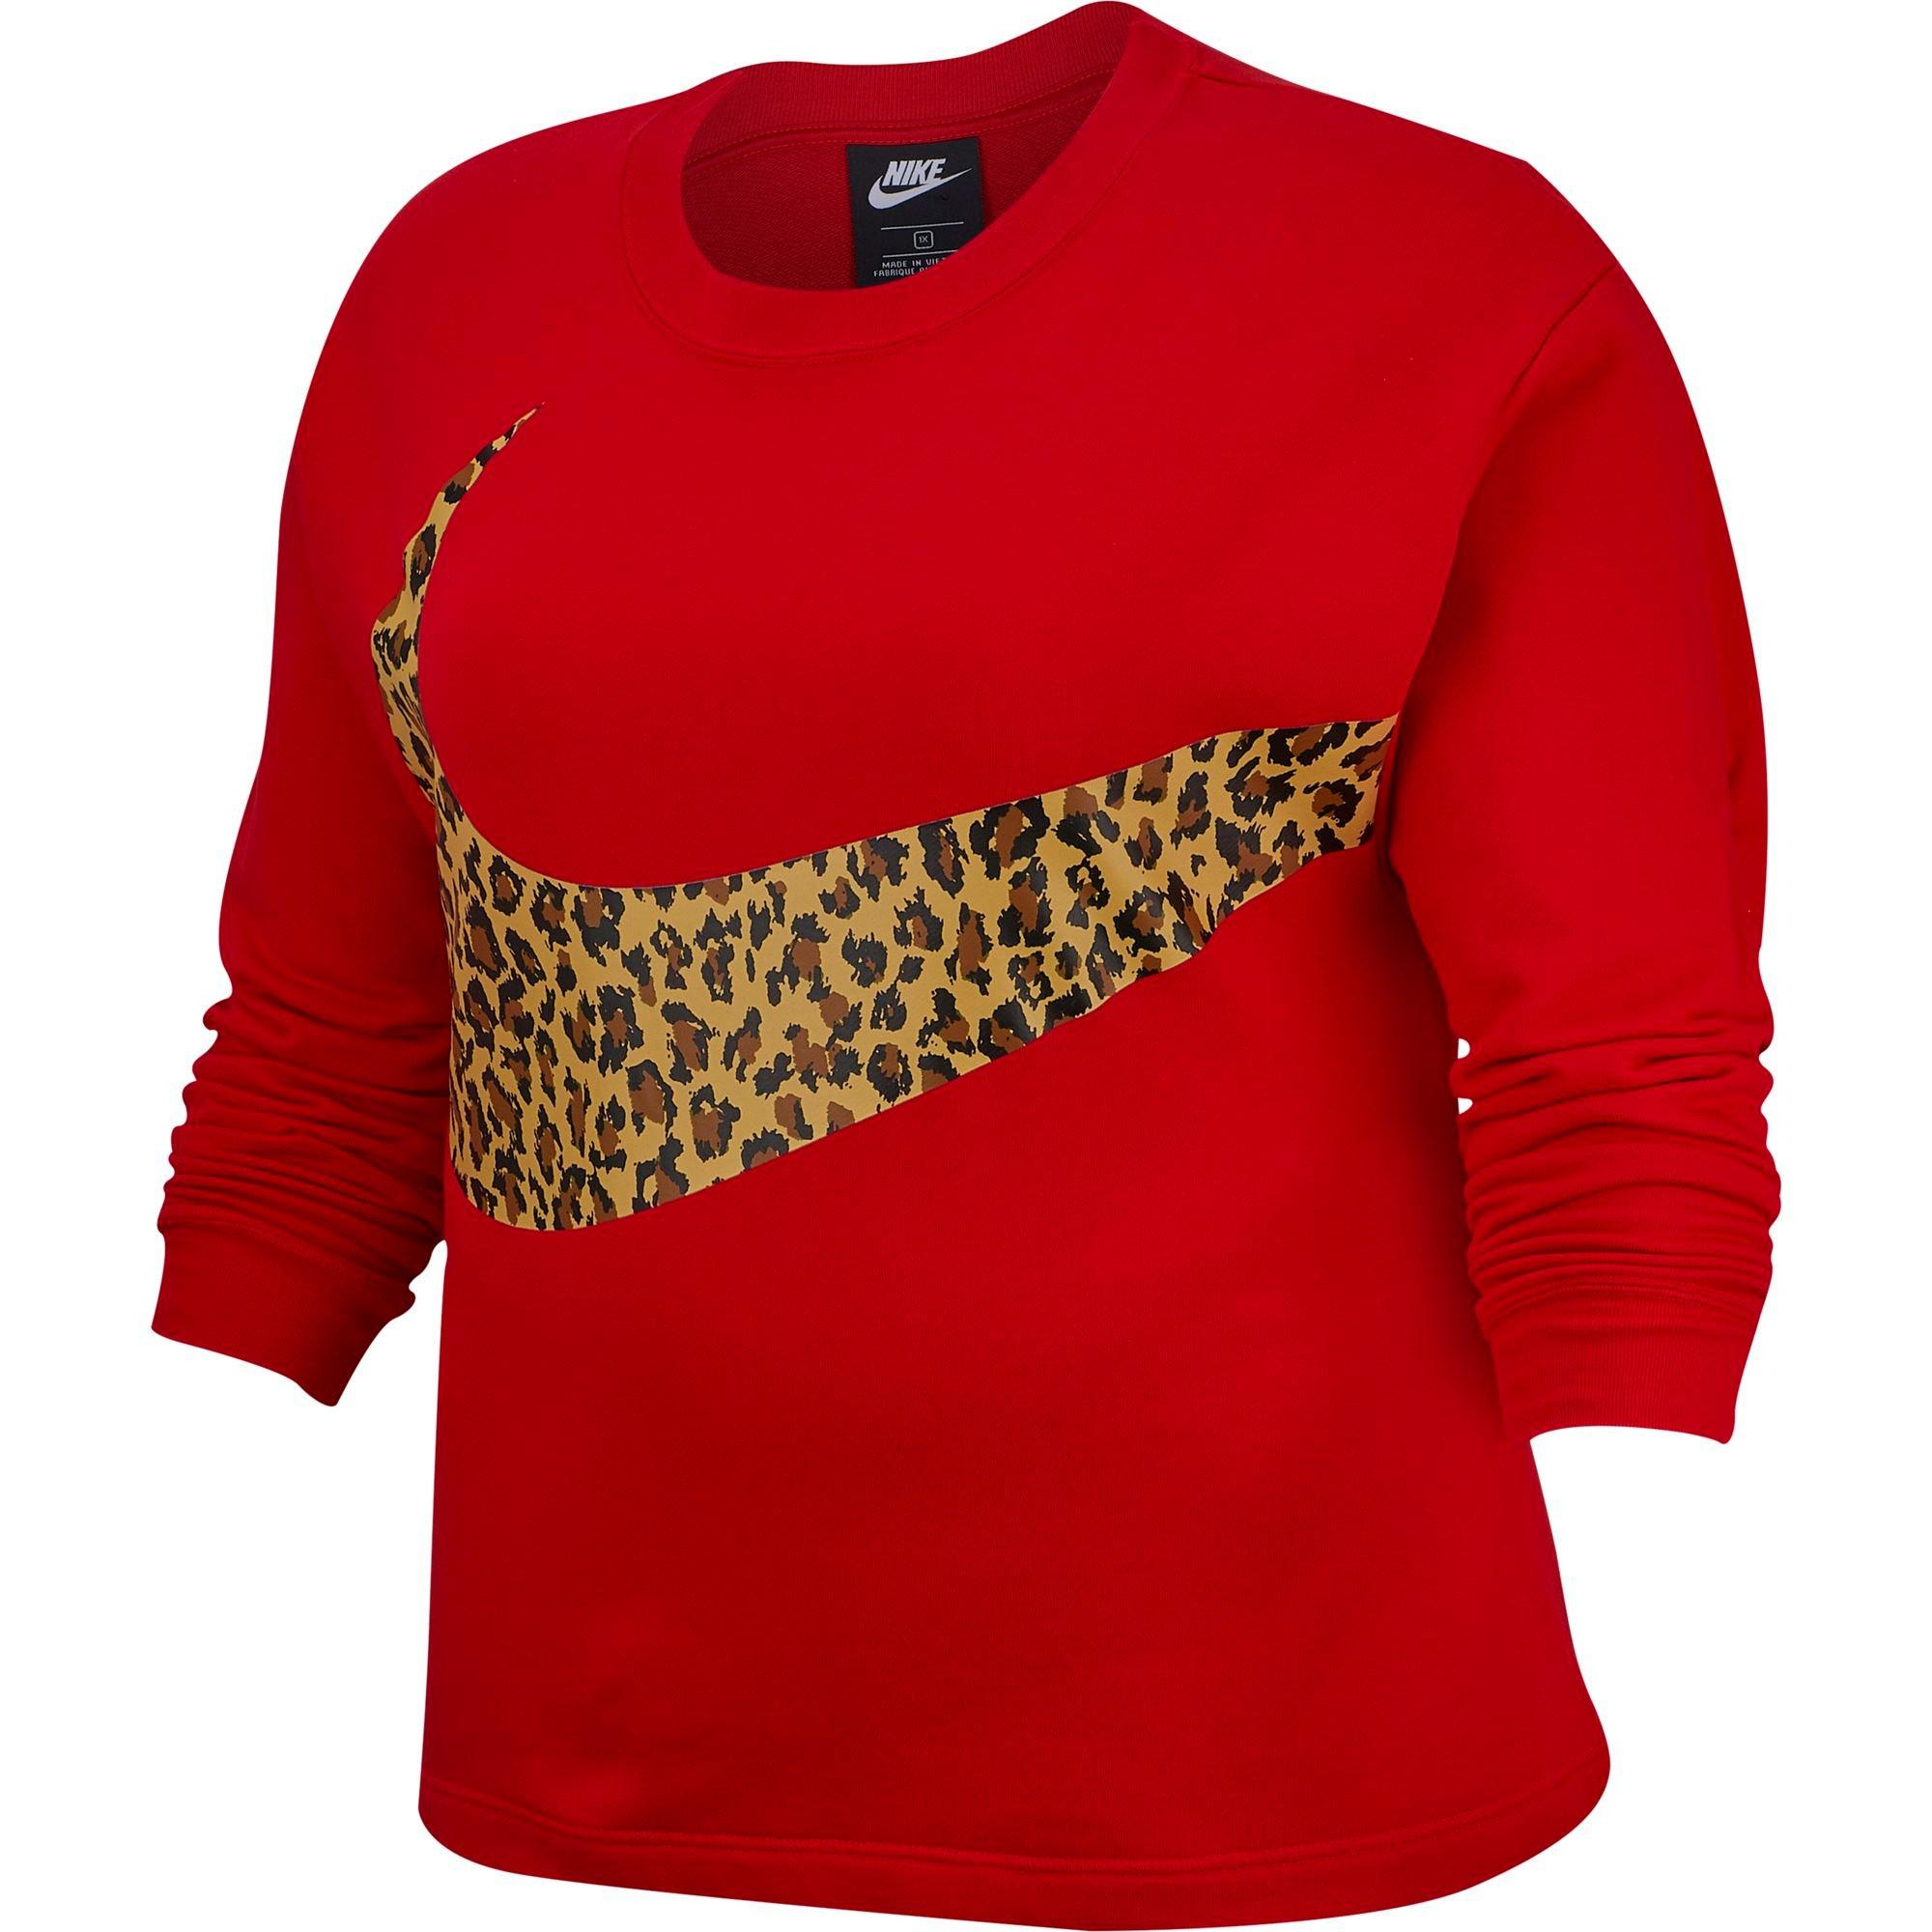 red and cheetah nike shirt